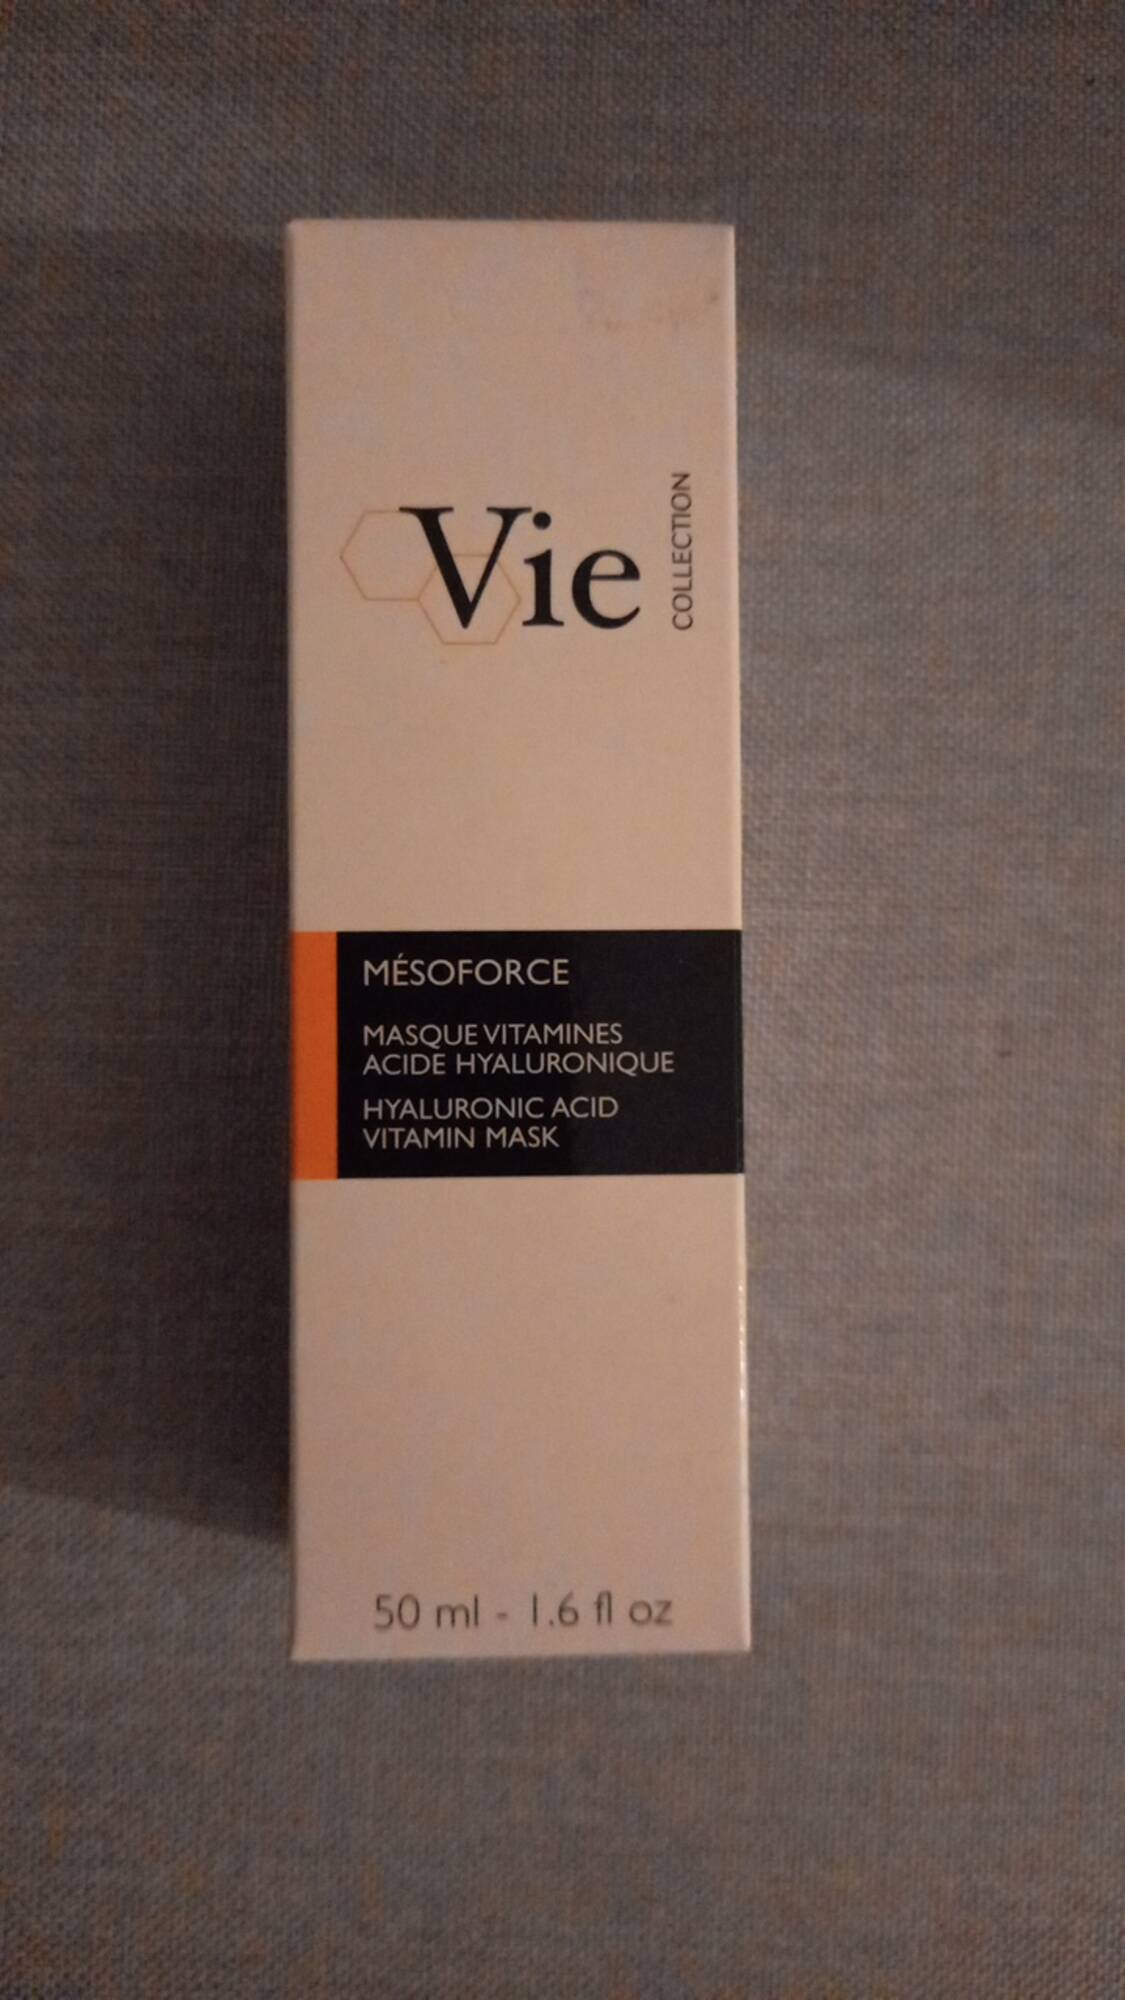 VIE COLLECTION - Mesoforce - Masque vitamines acide hyaluronique